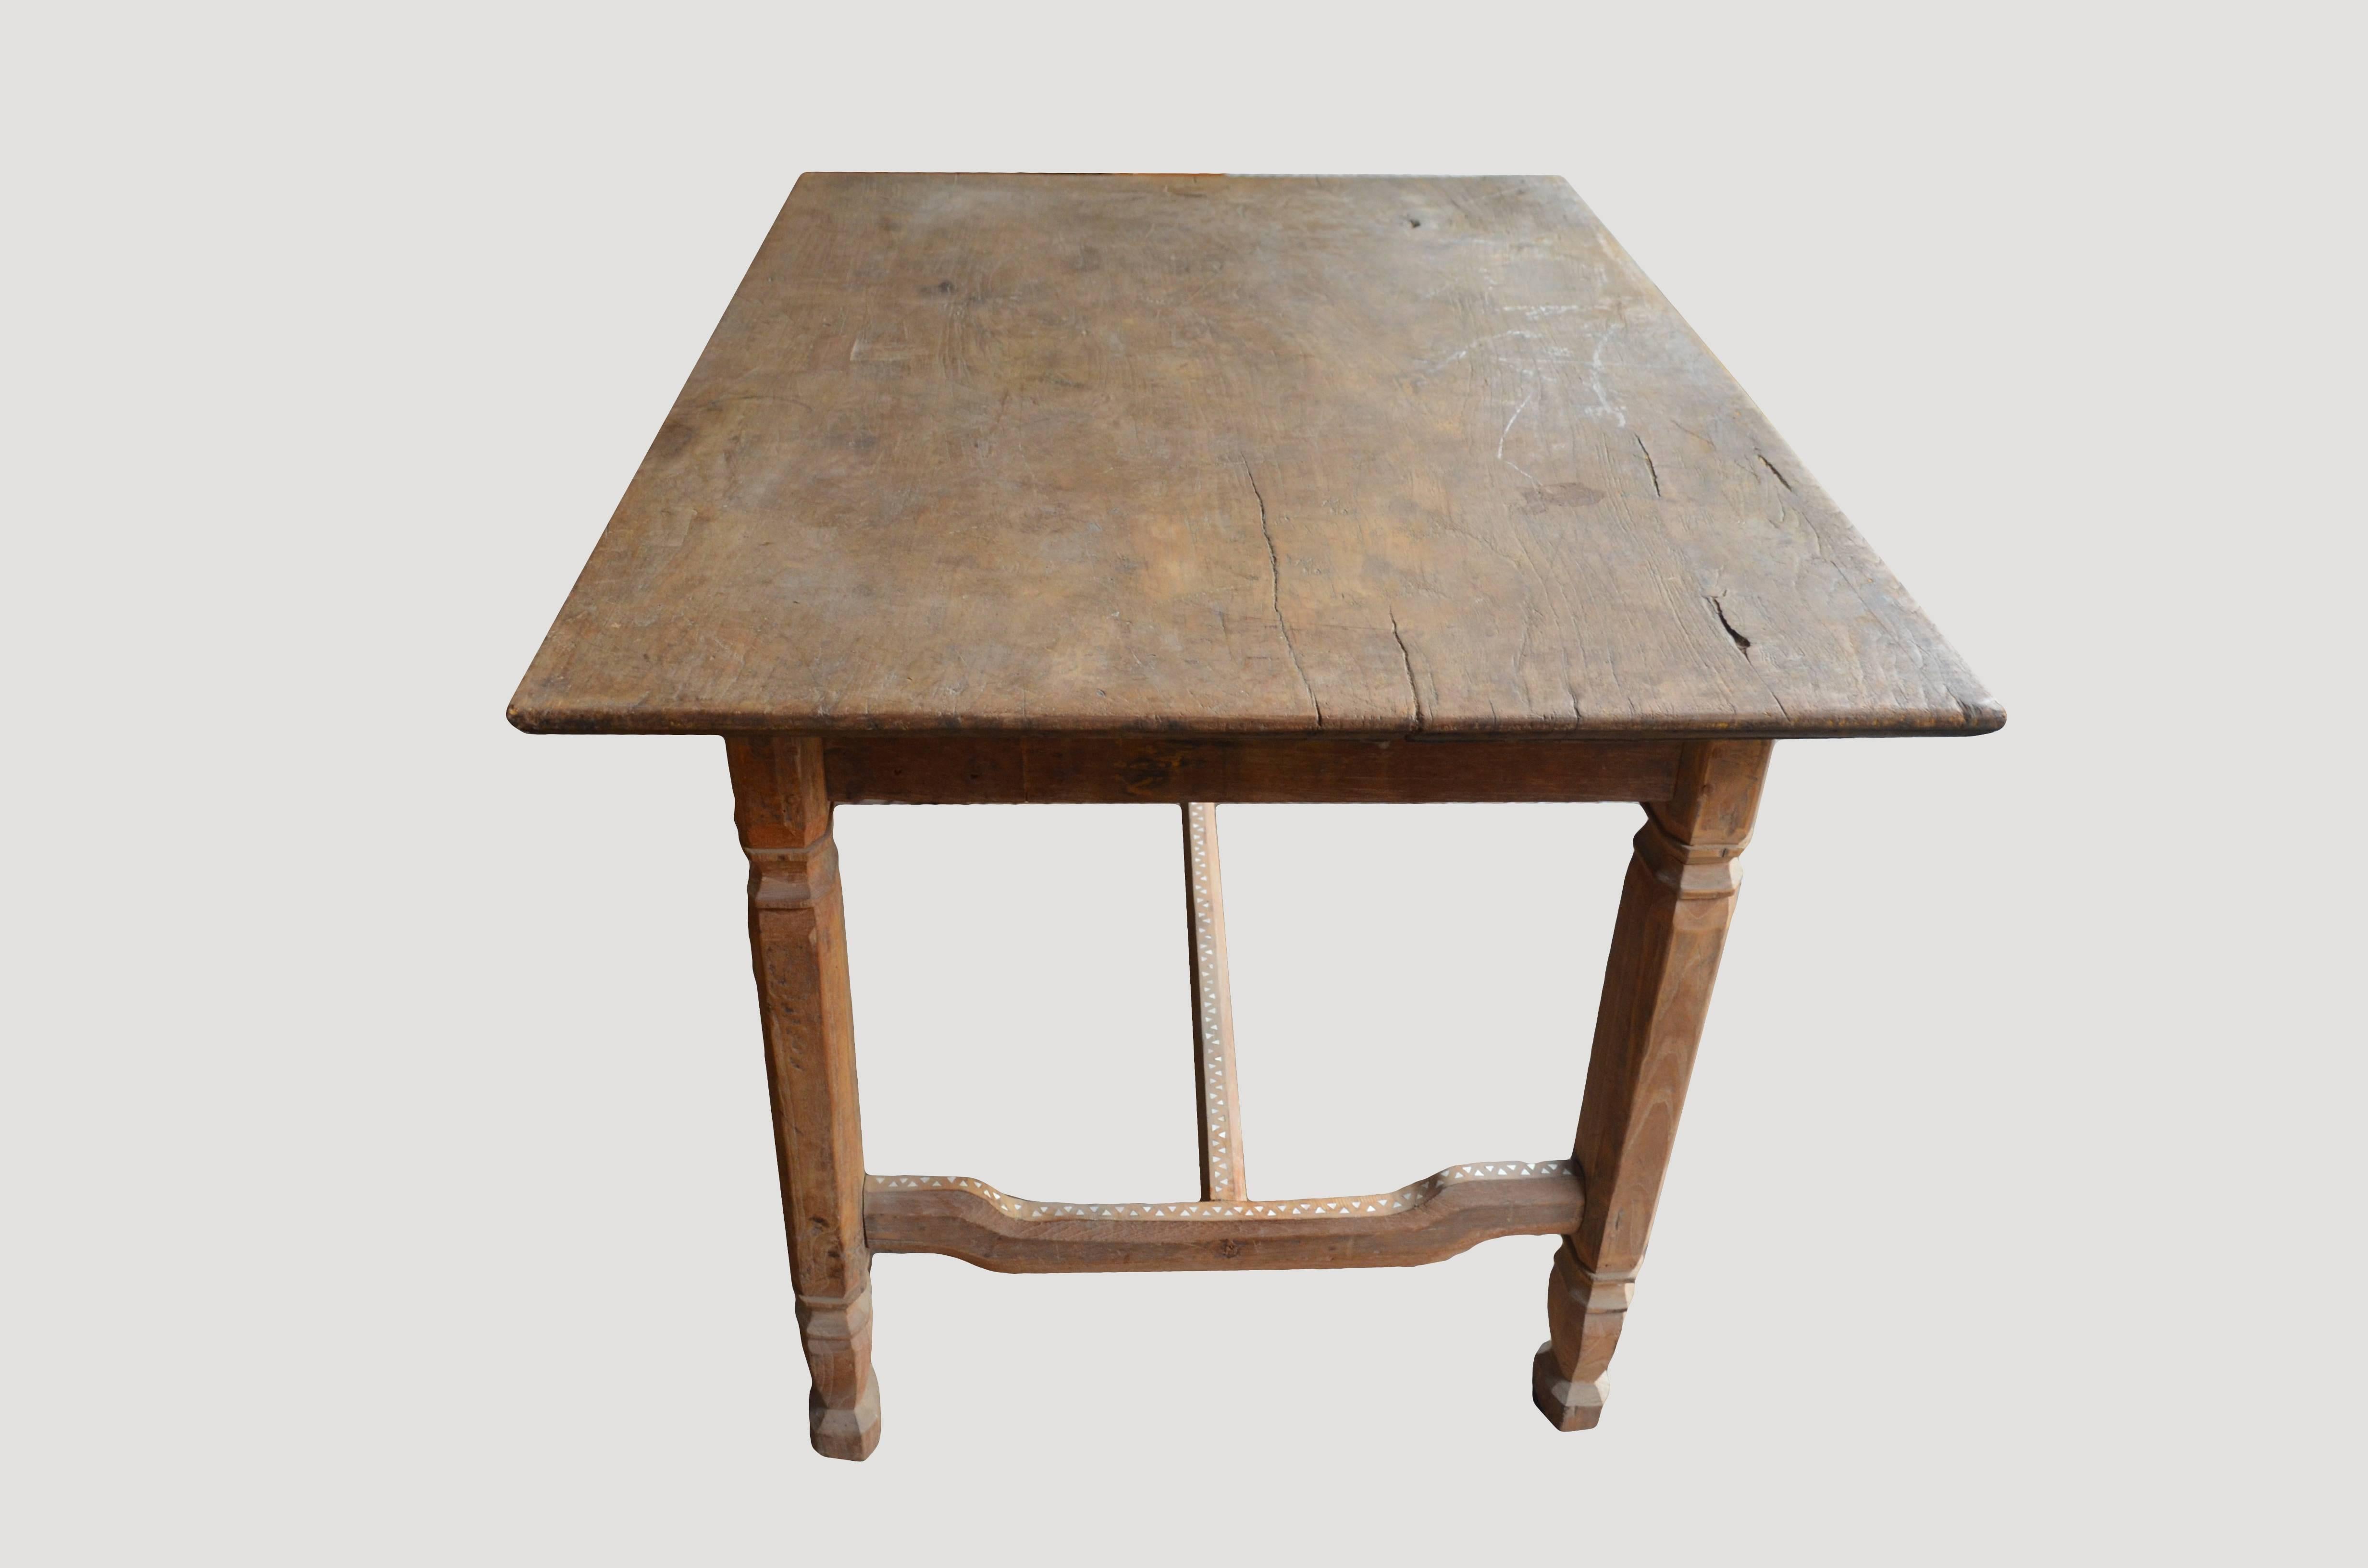 British Colonial Andrianna Shamaris Shell Inlay Teak Wood Table